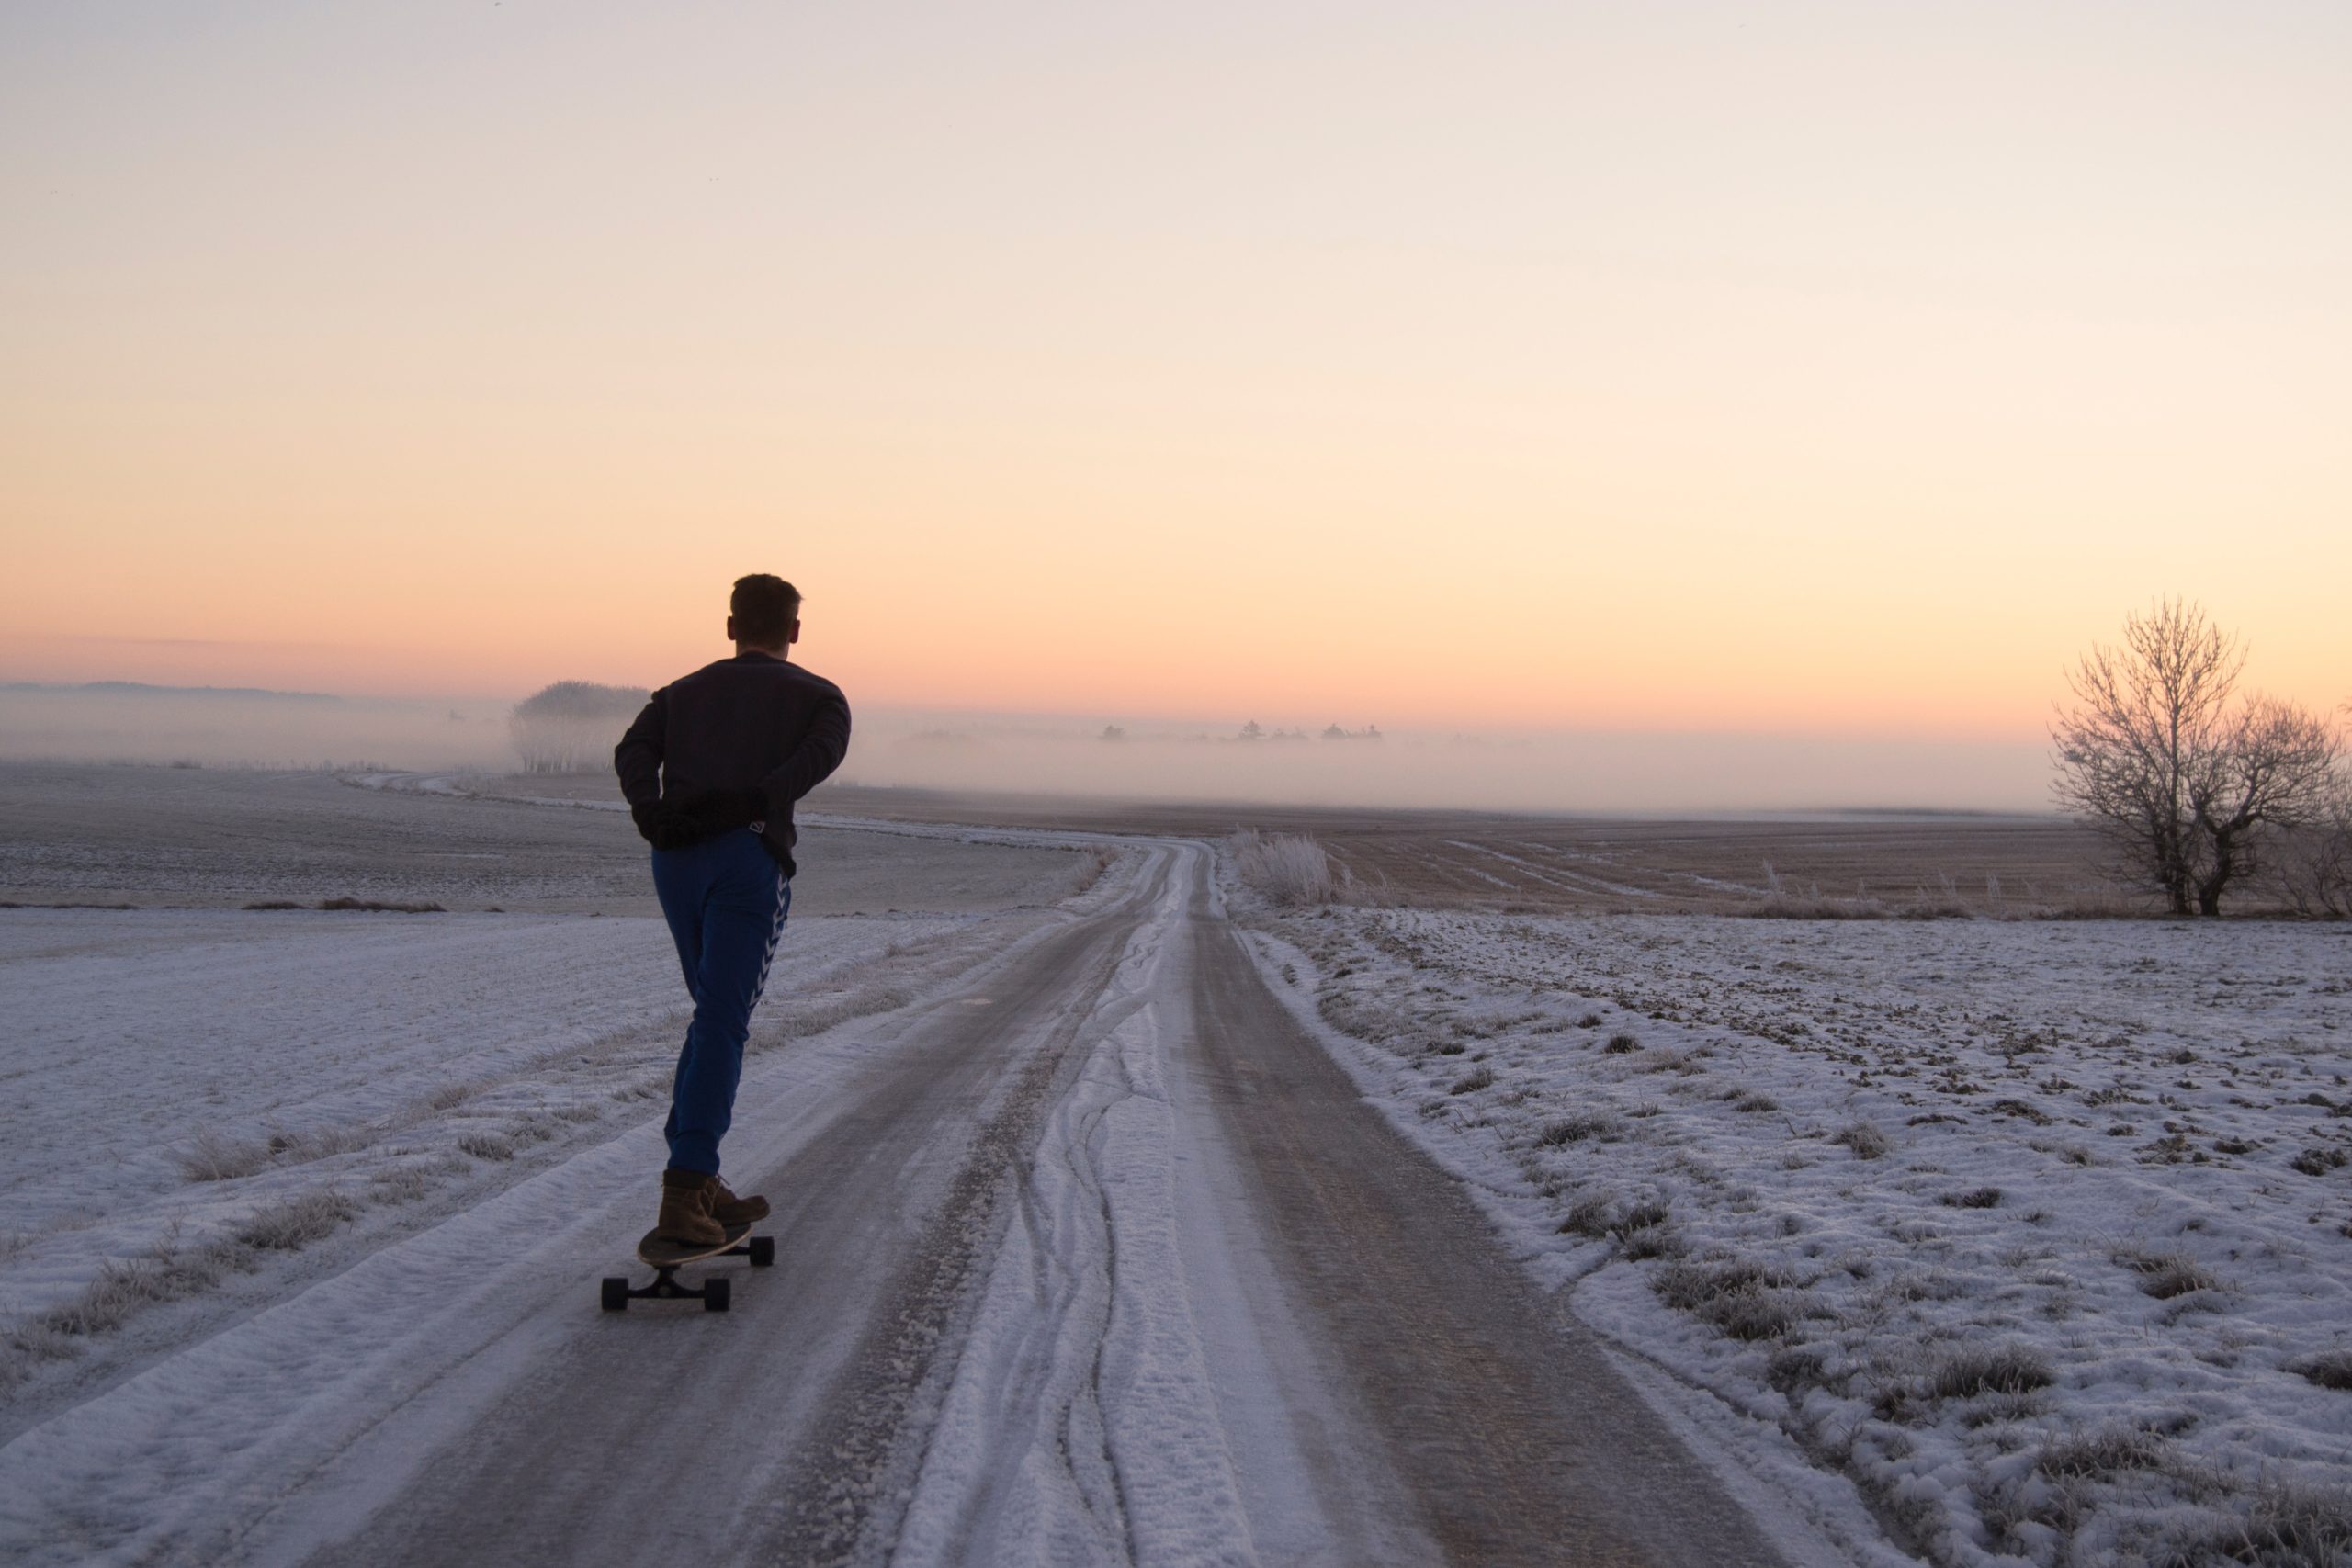 Frozen Fort Collins: Winter Activities for Remote Workers